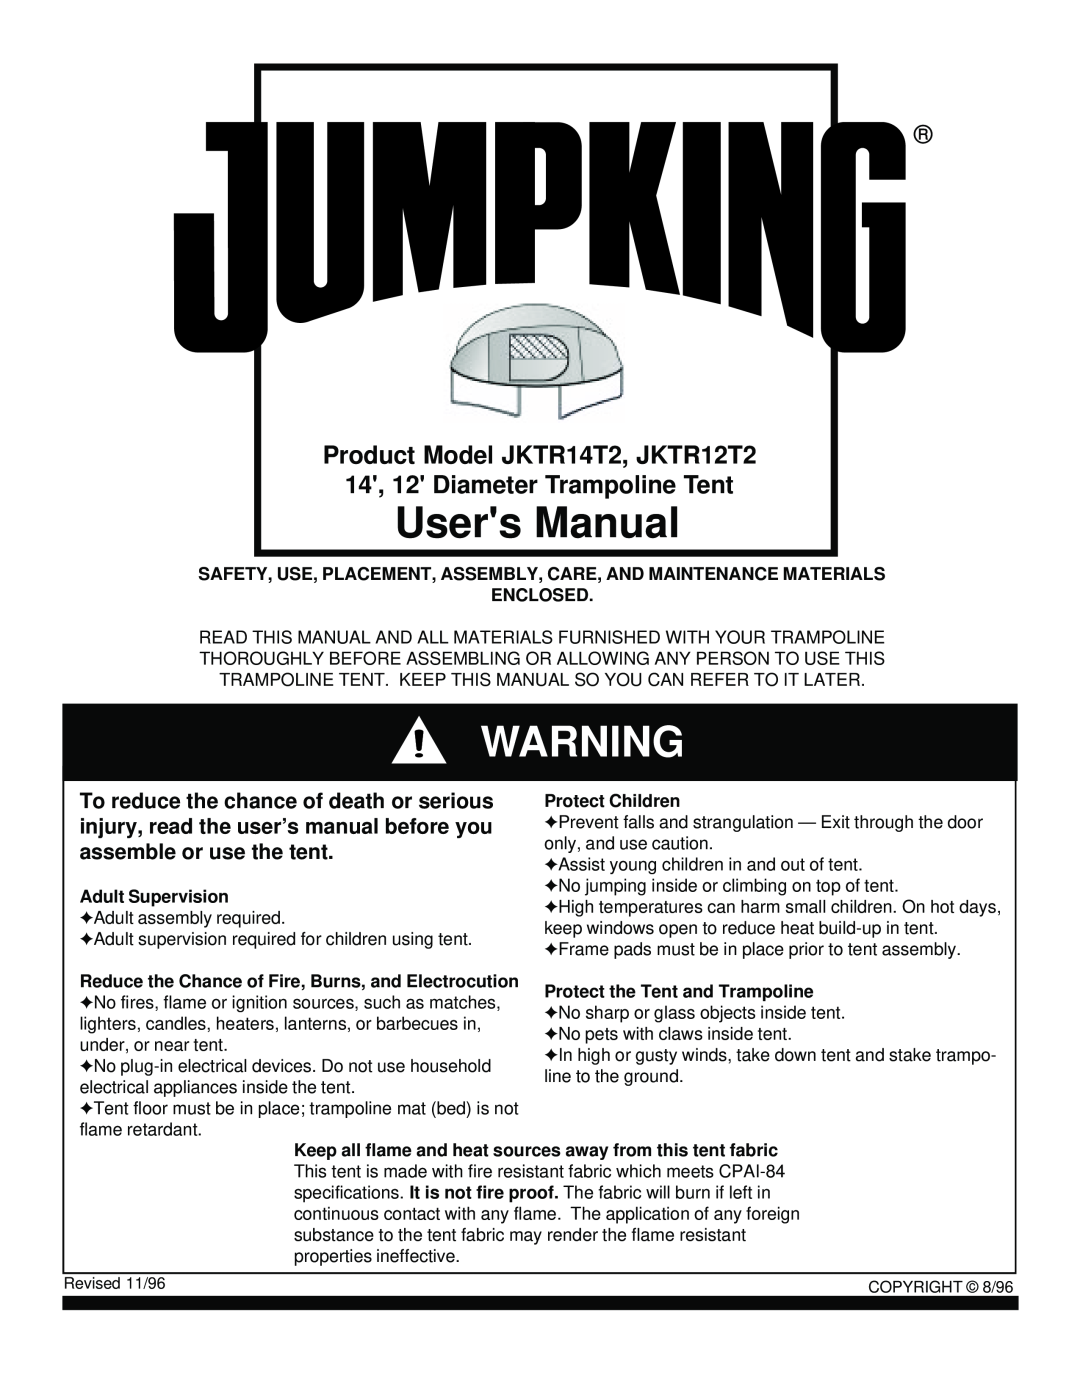 Jumpking manual Users Manual, Product Model JKTR14T2, JKTR12T2, 14, 12 Diameter Trampoline Tent, Enclosed 